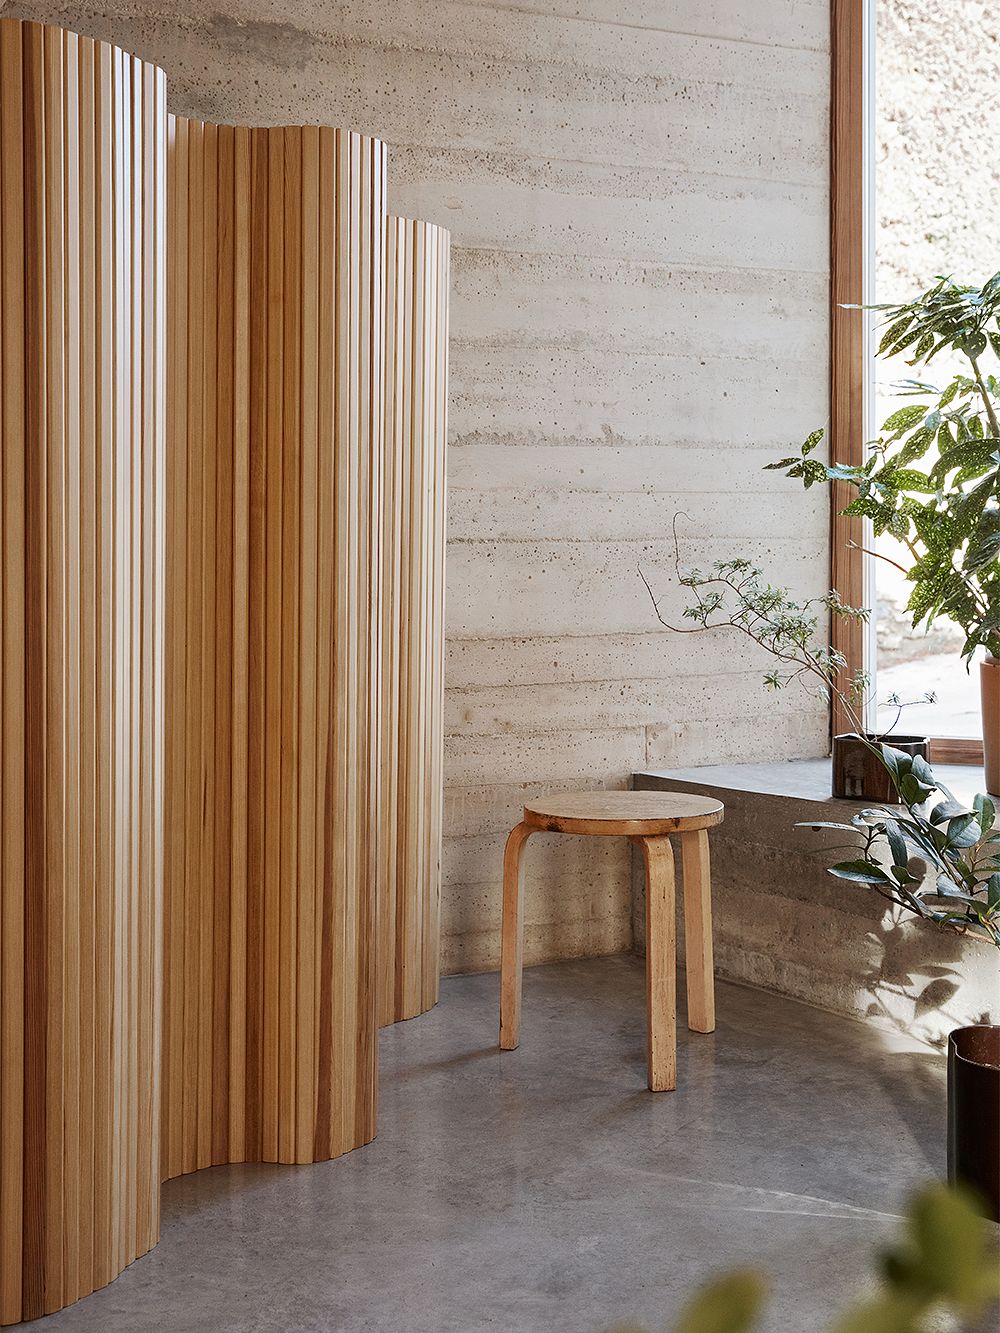 An image of Artek's Aalto stool 60 in a birch hue and Artek's Aalto screen 100 as part of the living room decor.